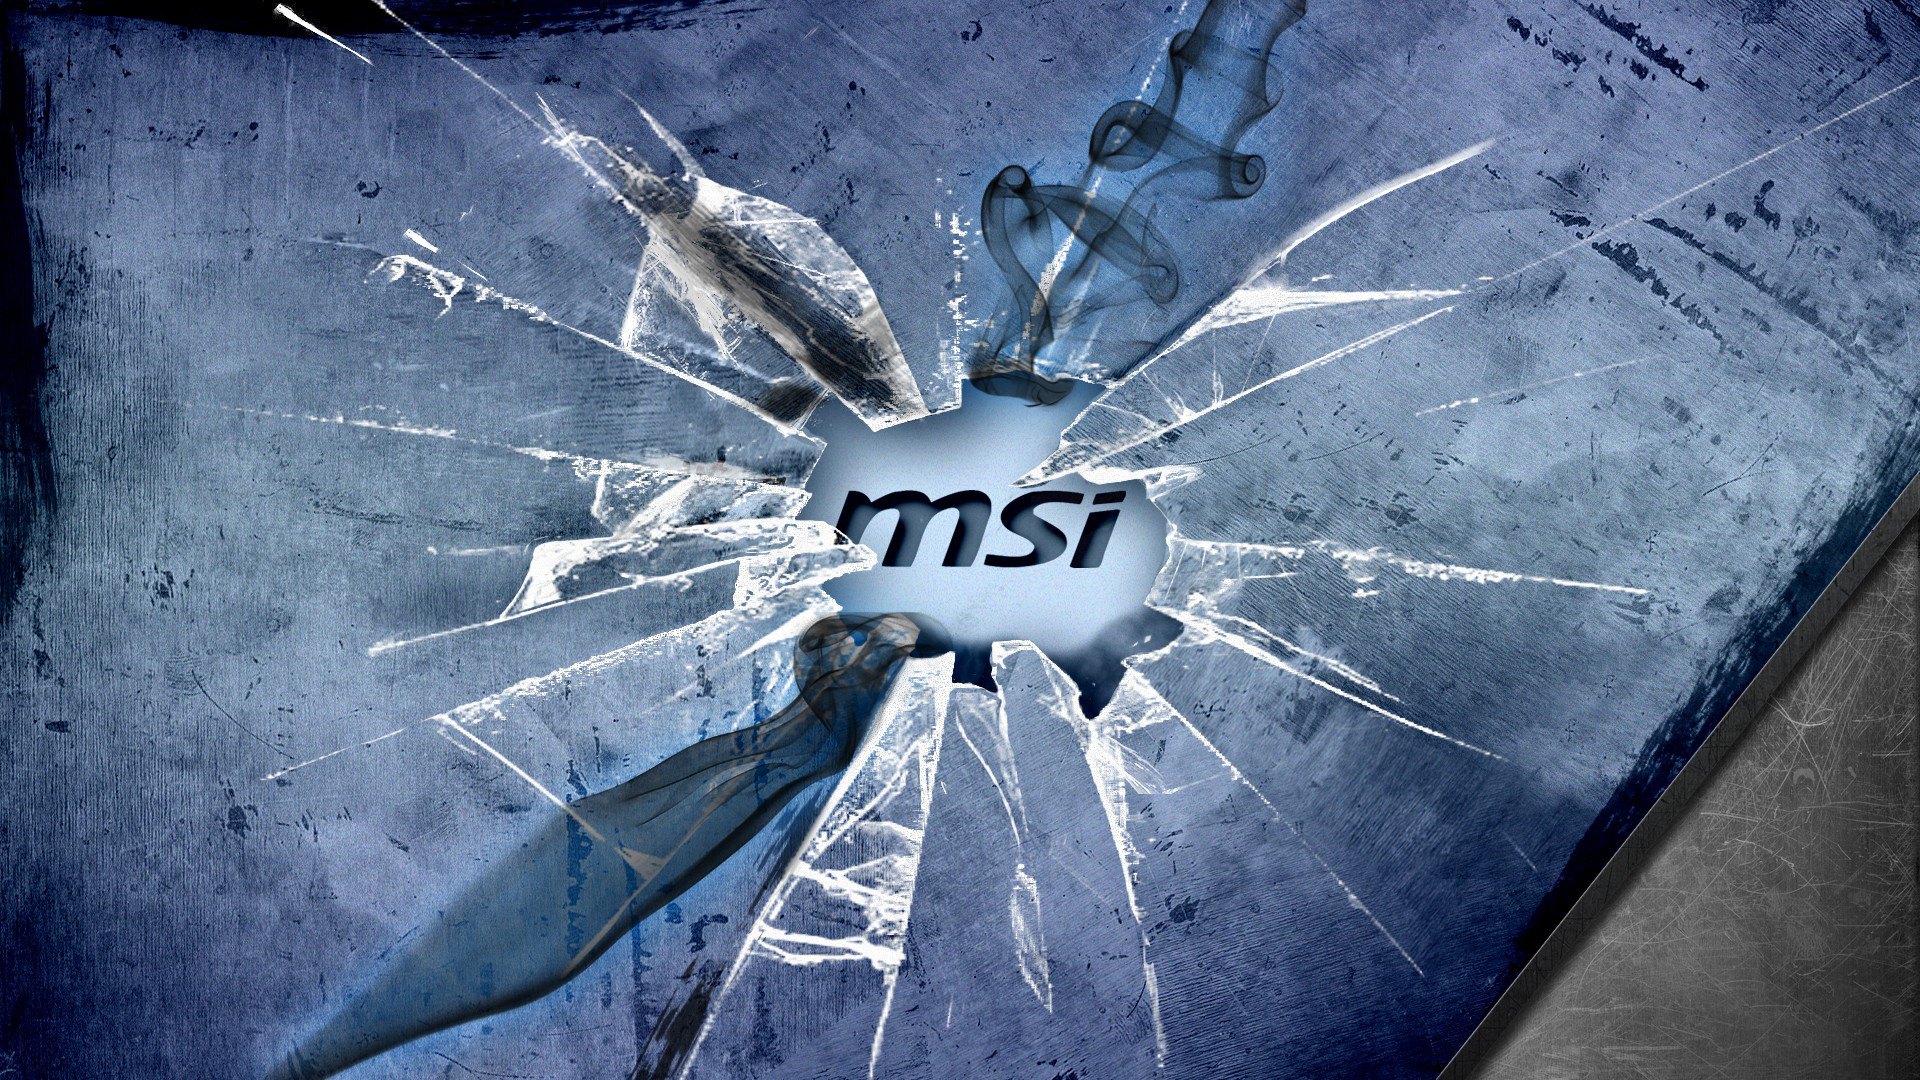 msi cool crack broken glass logo hd 1920x1080 1080p wallpaper 1920x1080